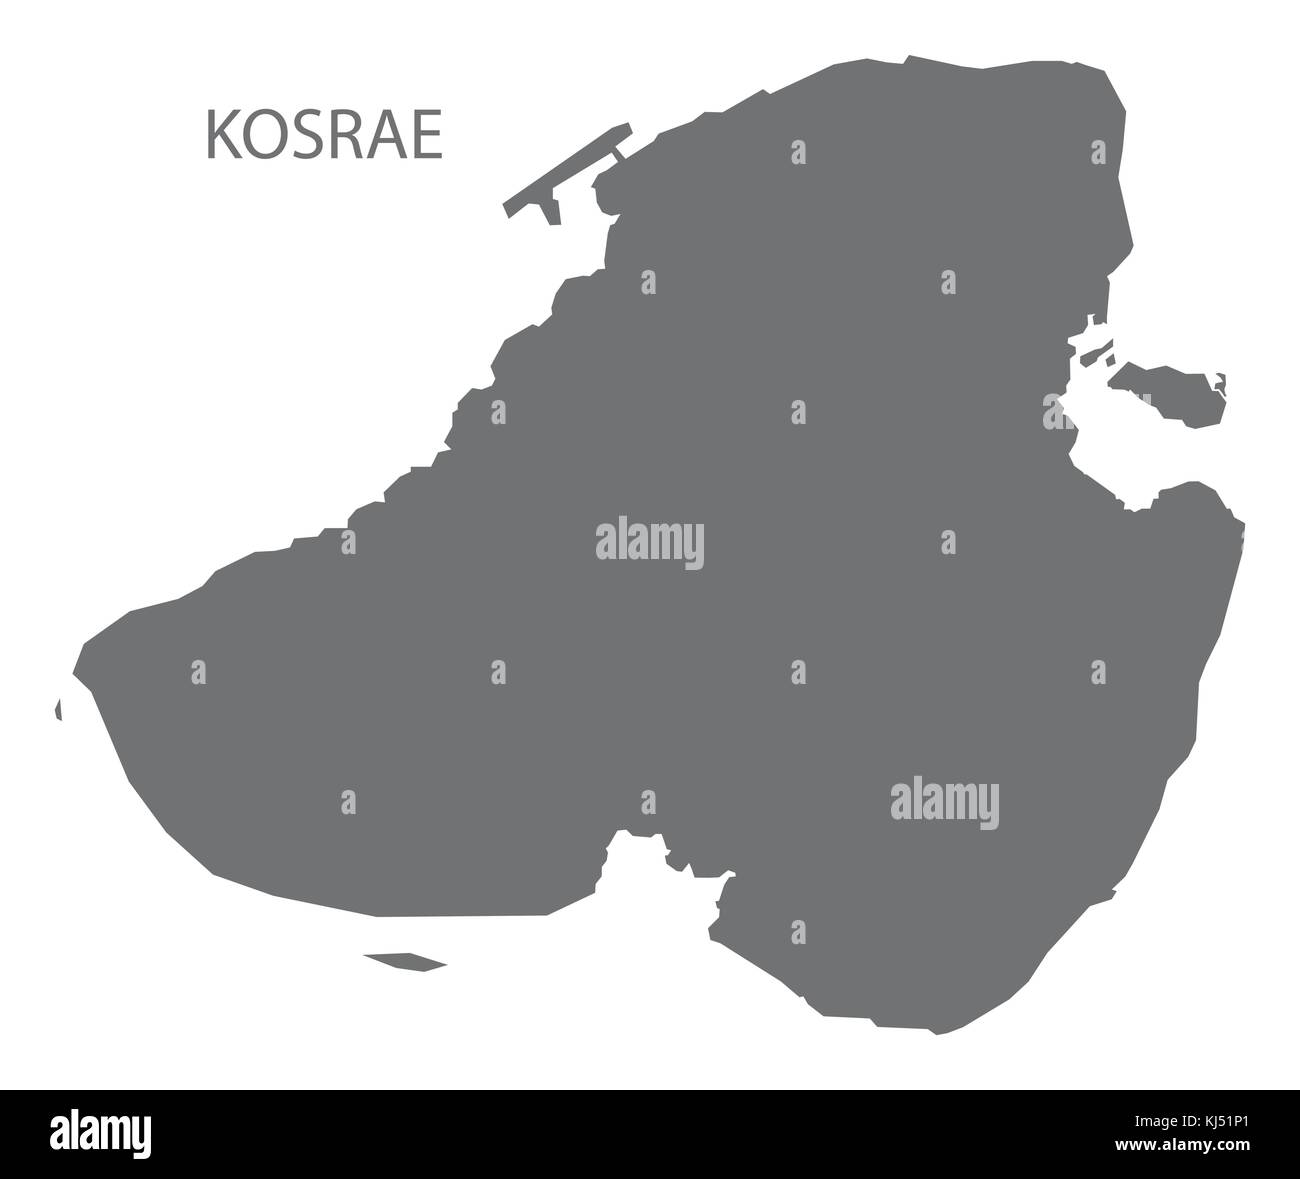 Kosrae Island map of Micronesia grey illustration silhouette shape Stock Vector